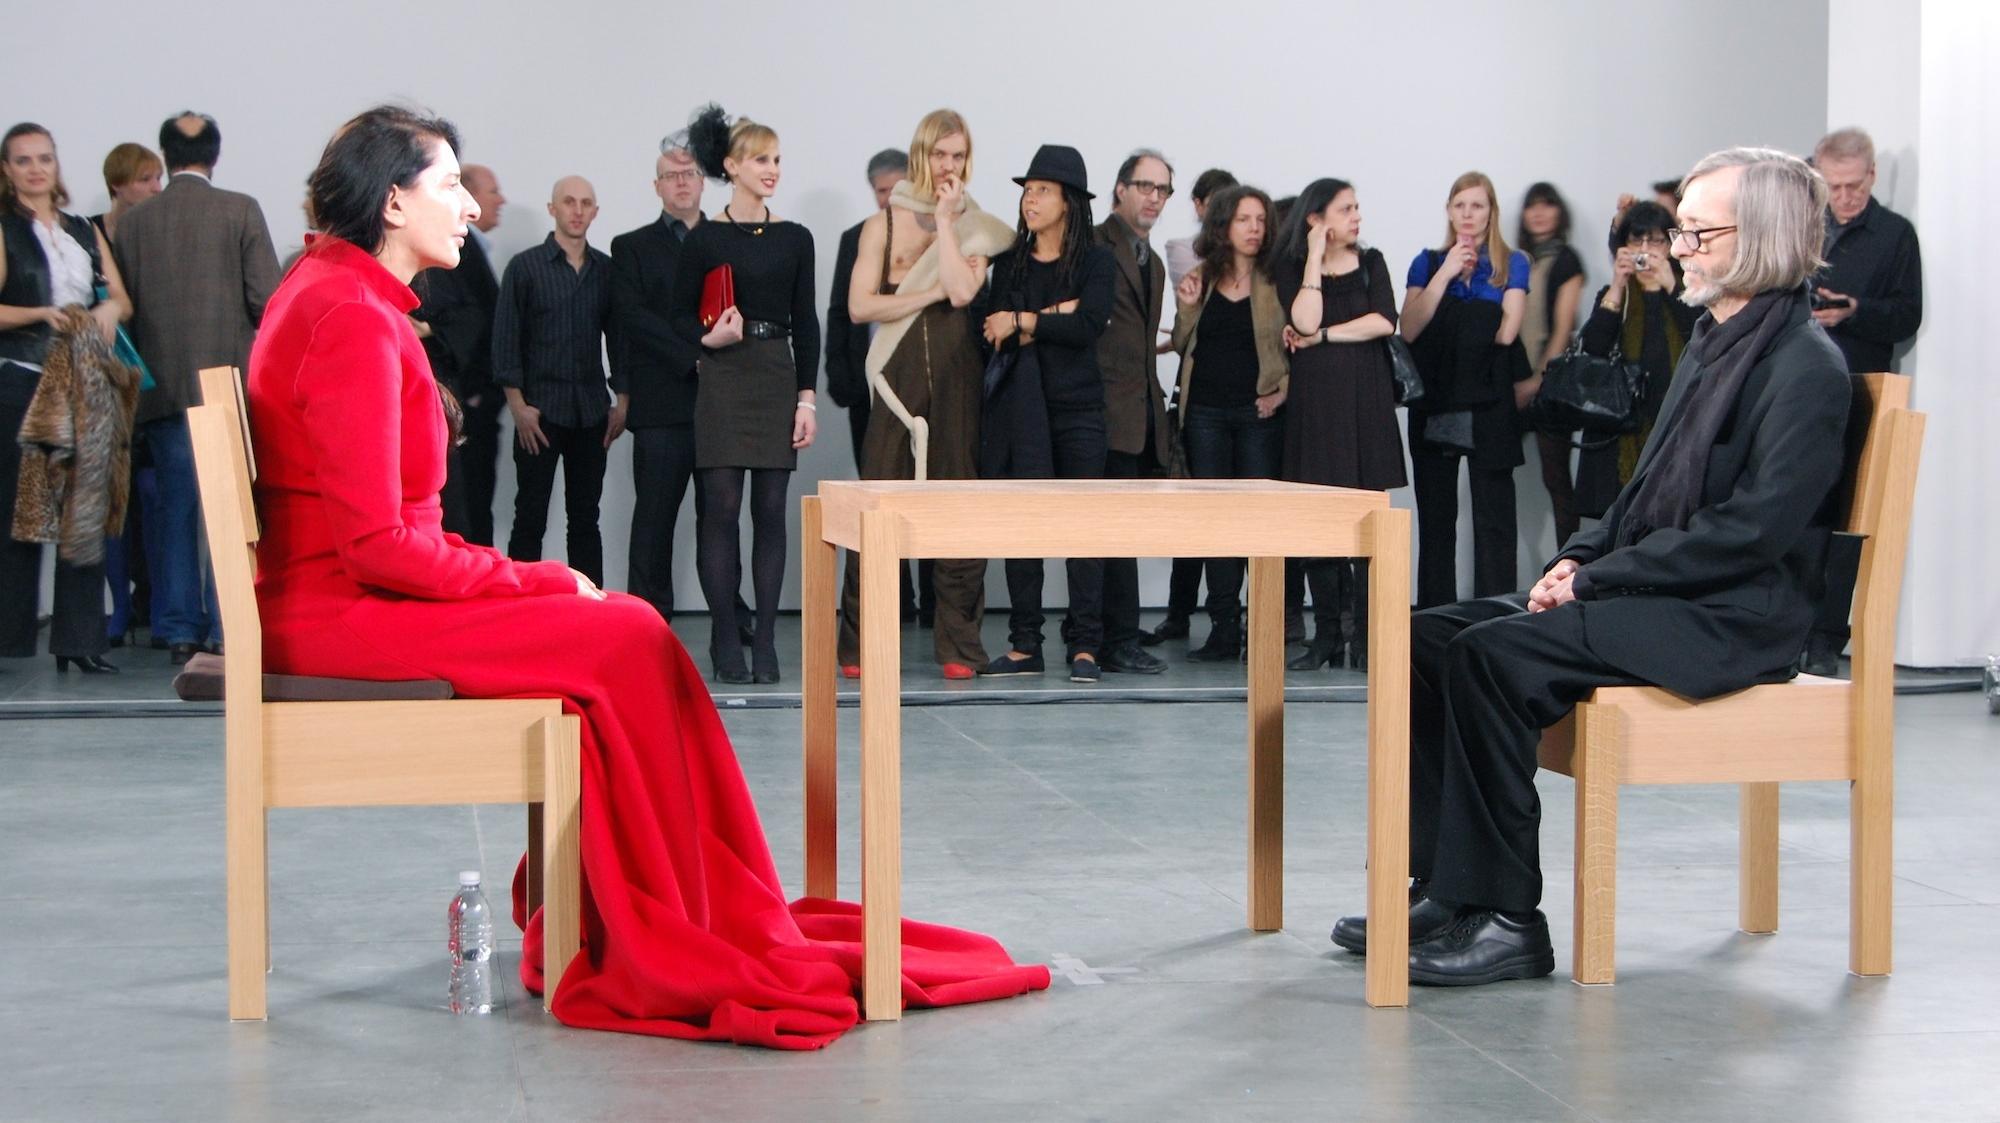 Marina Abramovic (2010) The Artist is Present: a performance art piece at MoMA, New York. 